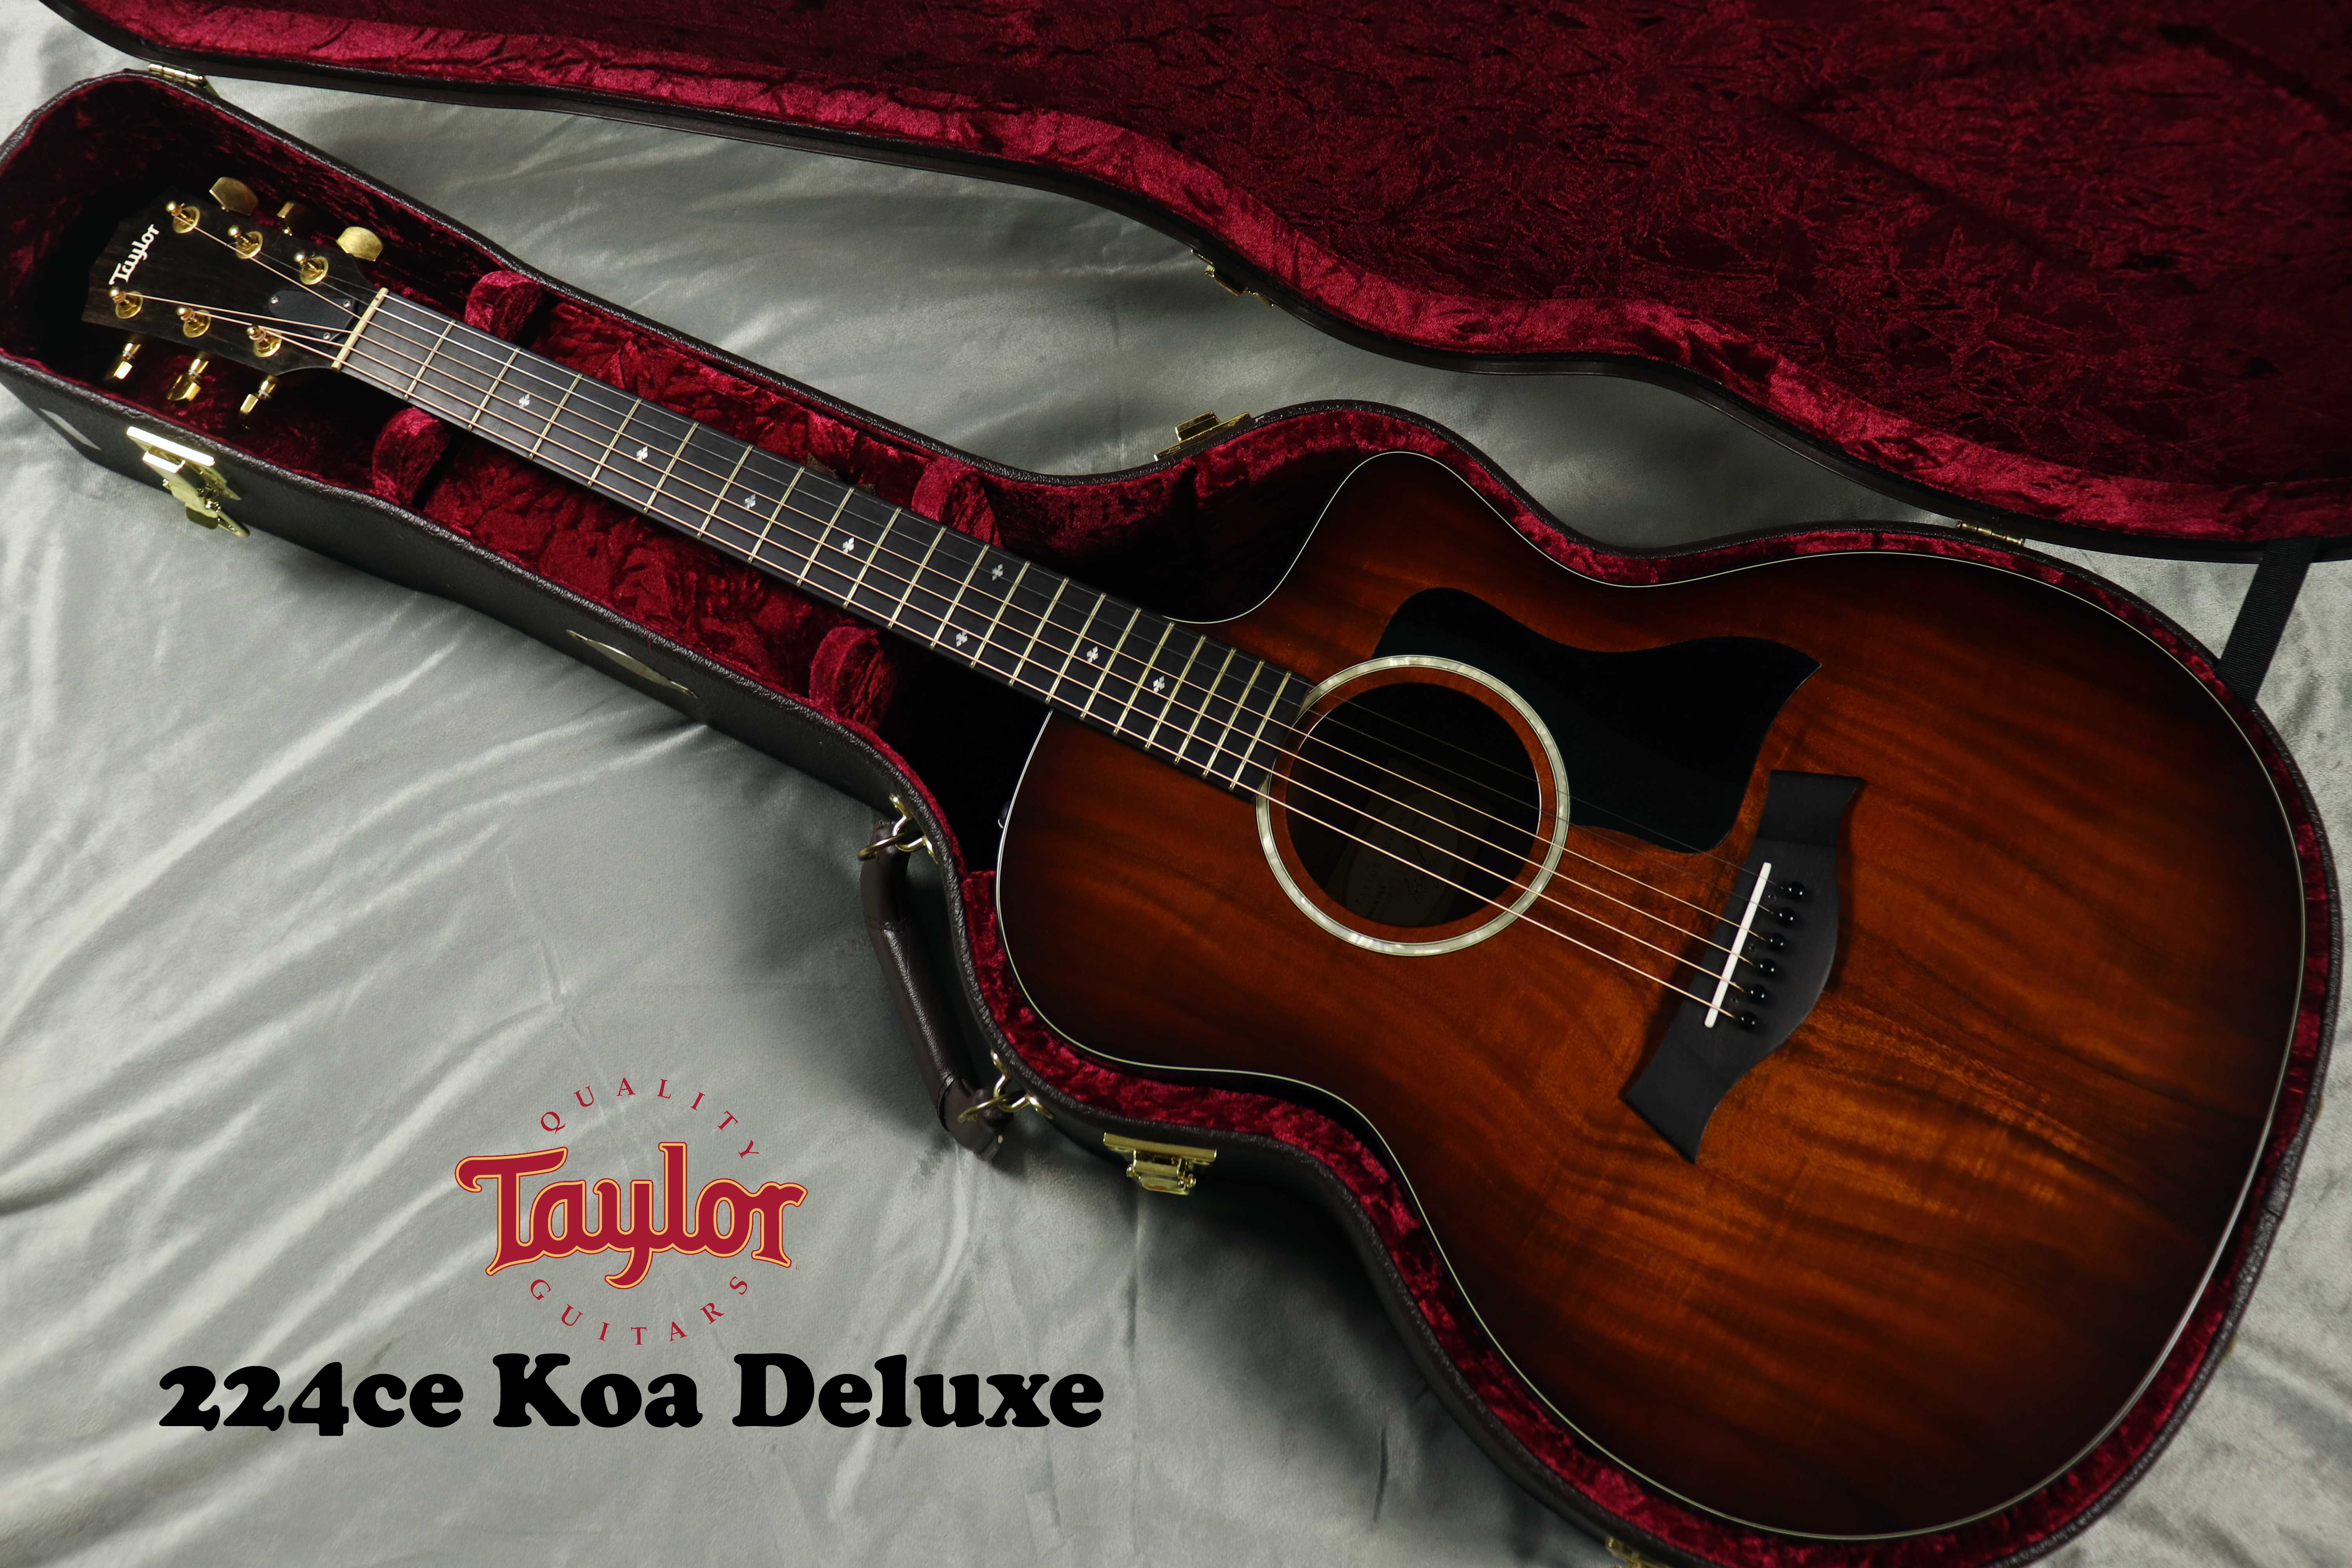 Taylor K224ce Koa Deluxe (Used)